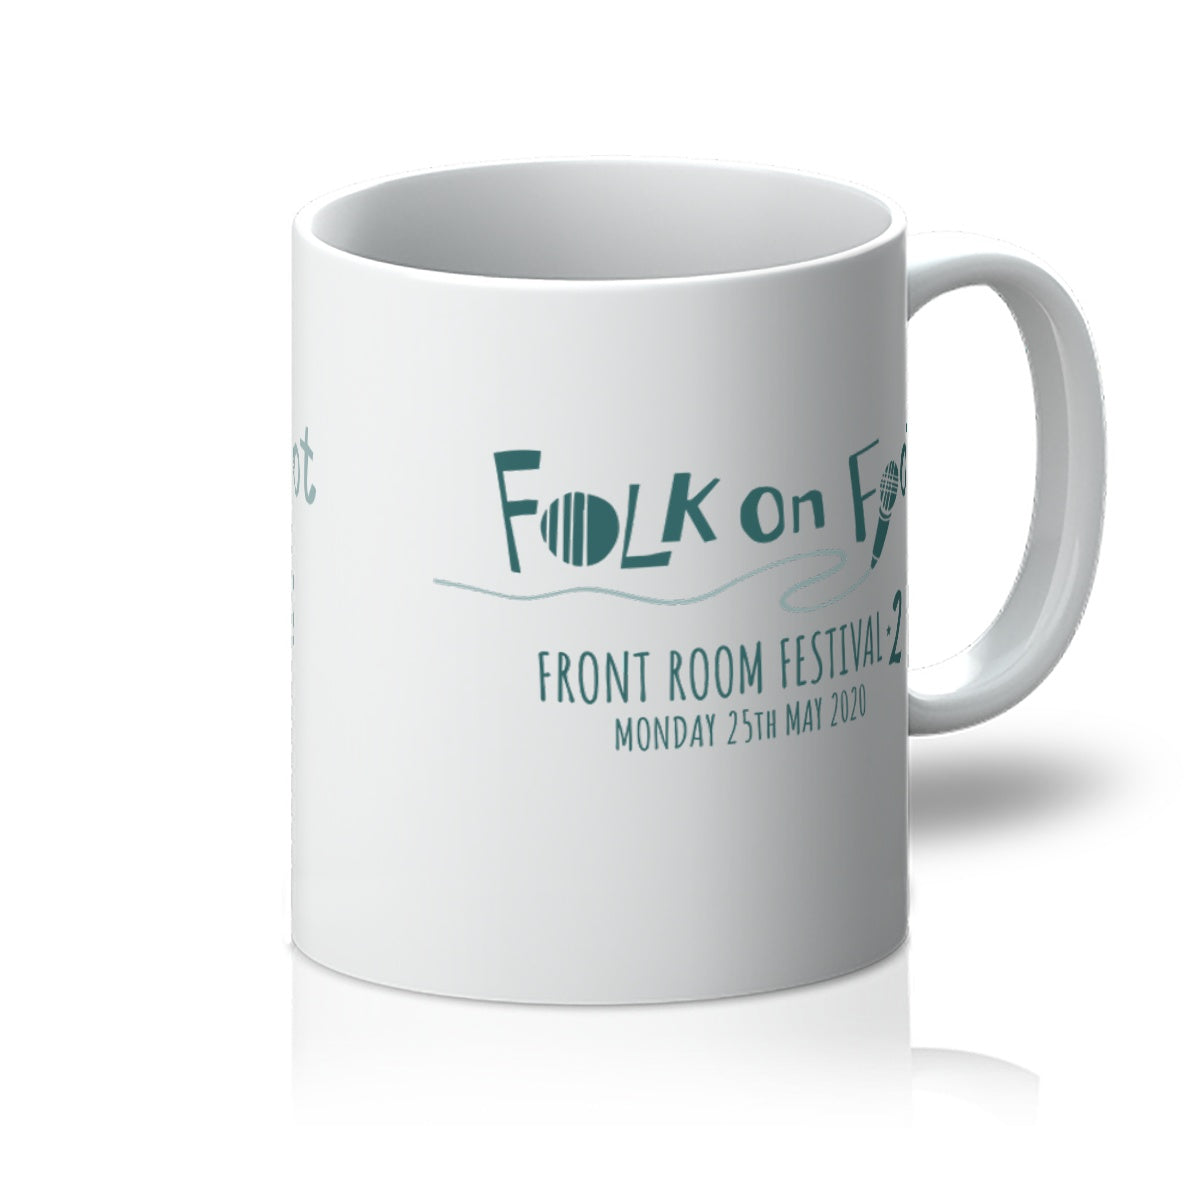 Folk on Foot 2 - May 2020 Mug